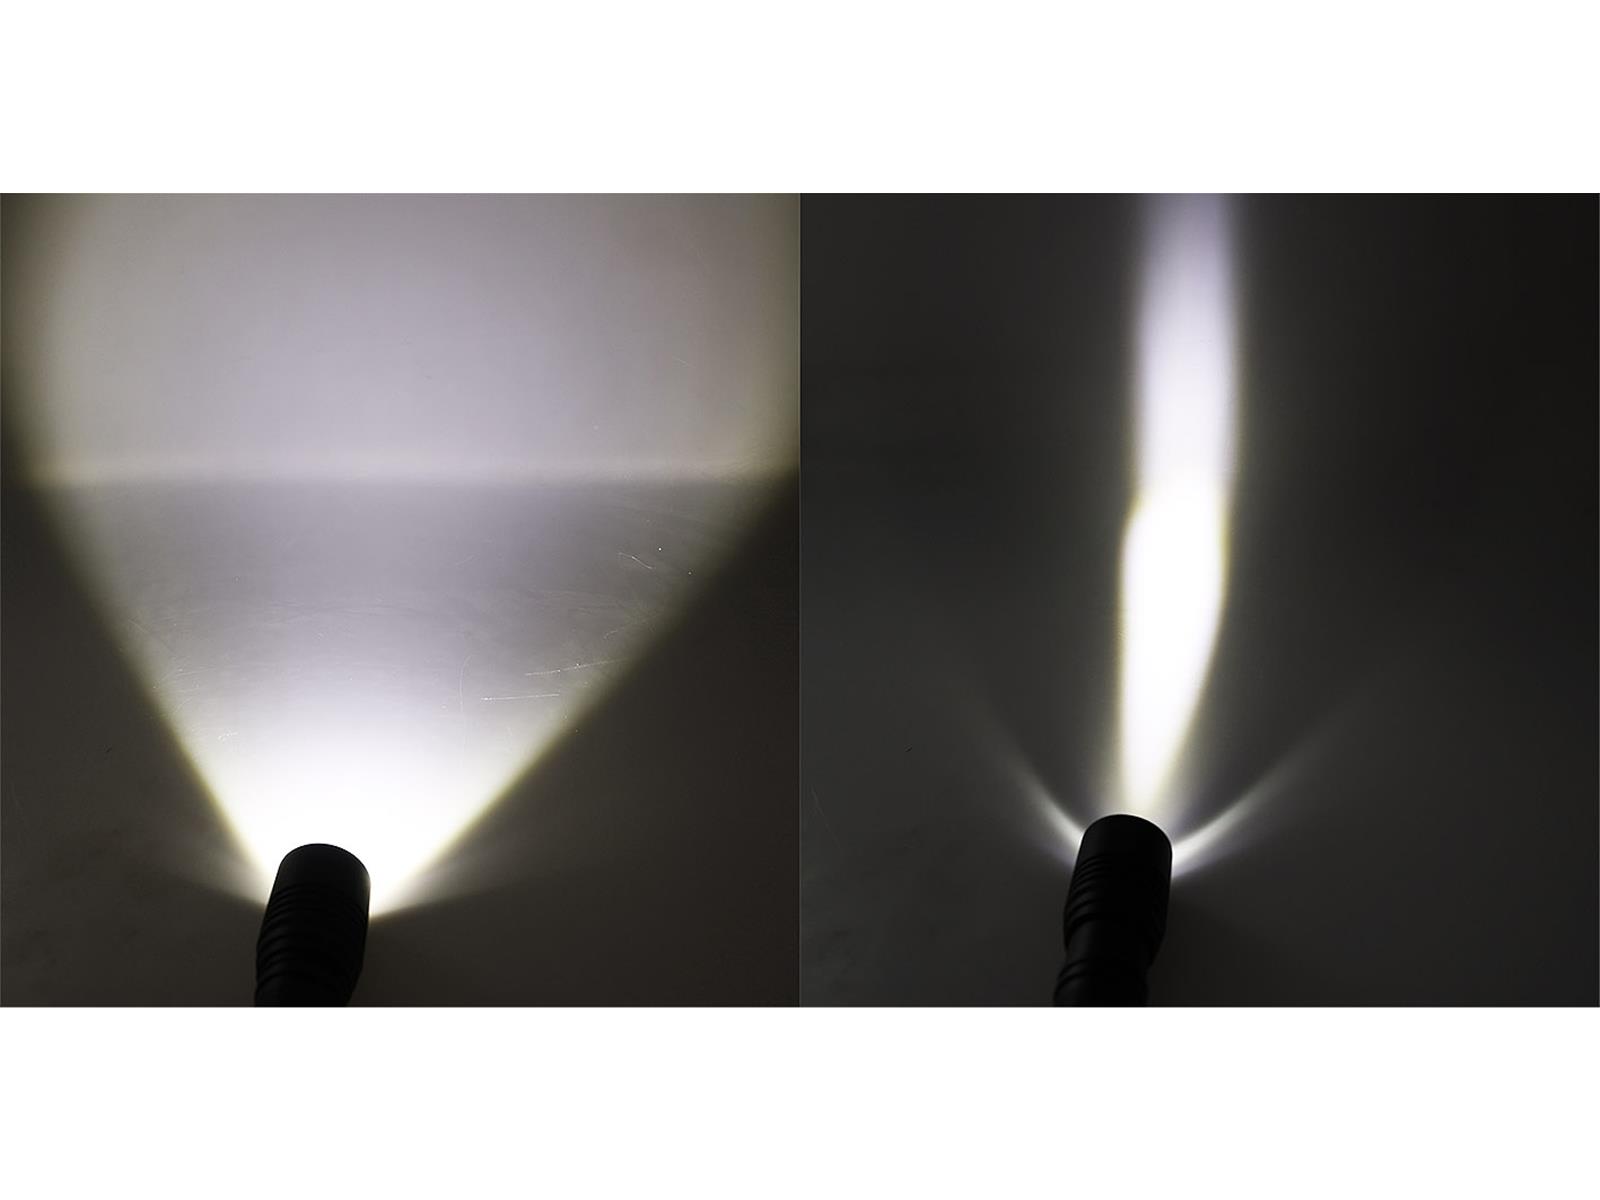 LED-Taschenlampe ARCAS 18W ZoomØxL 48x205mm, 1600 Lumen